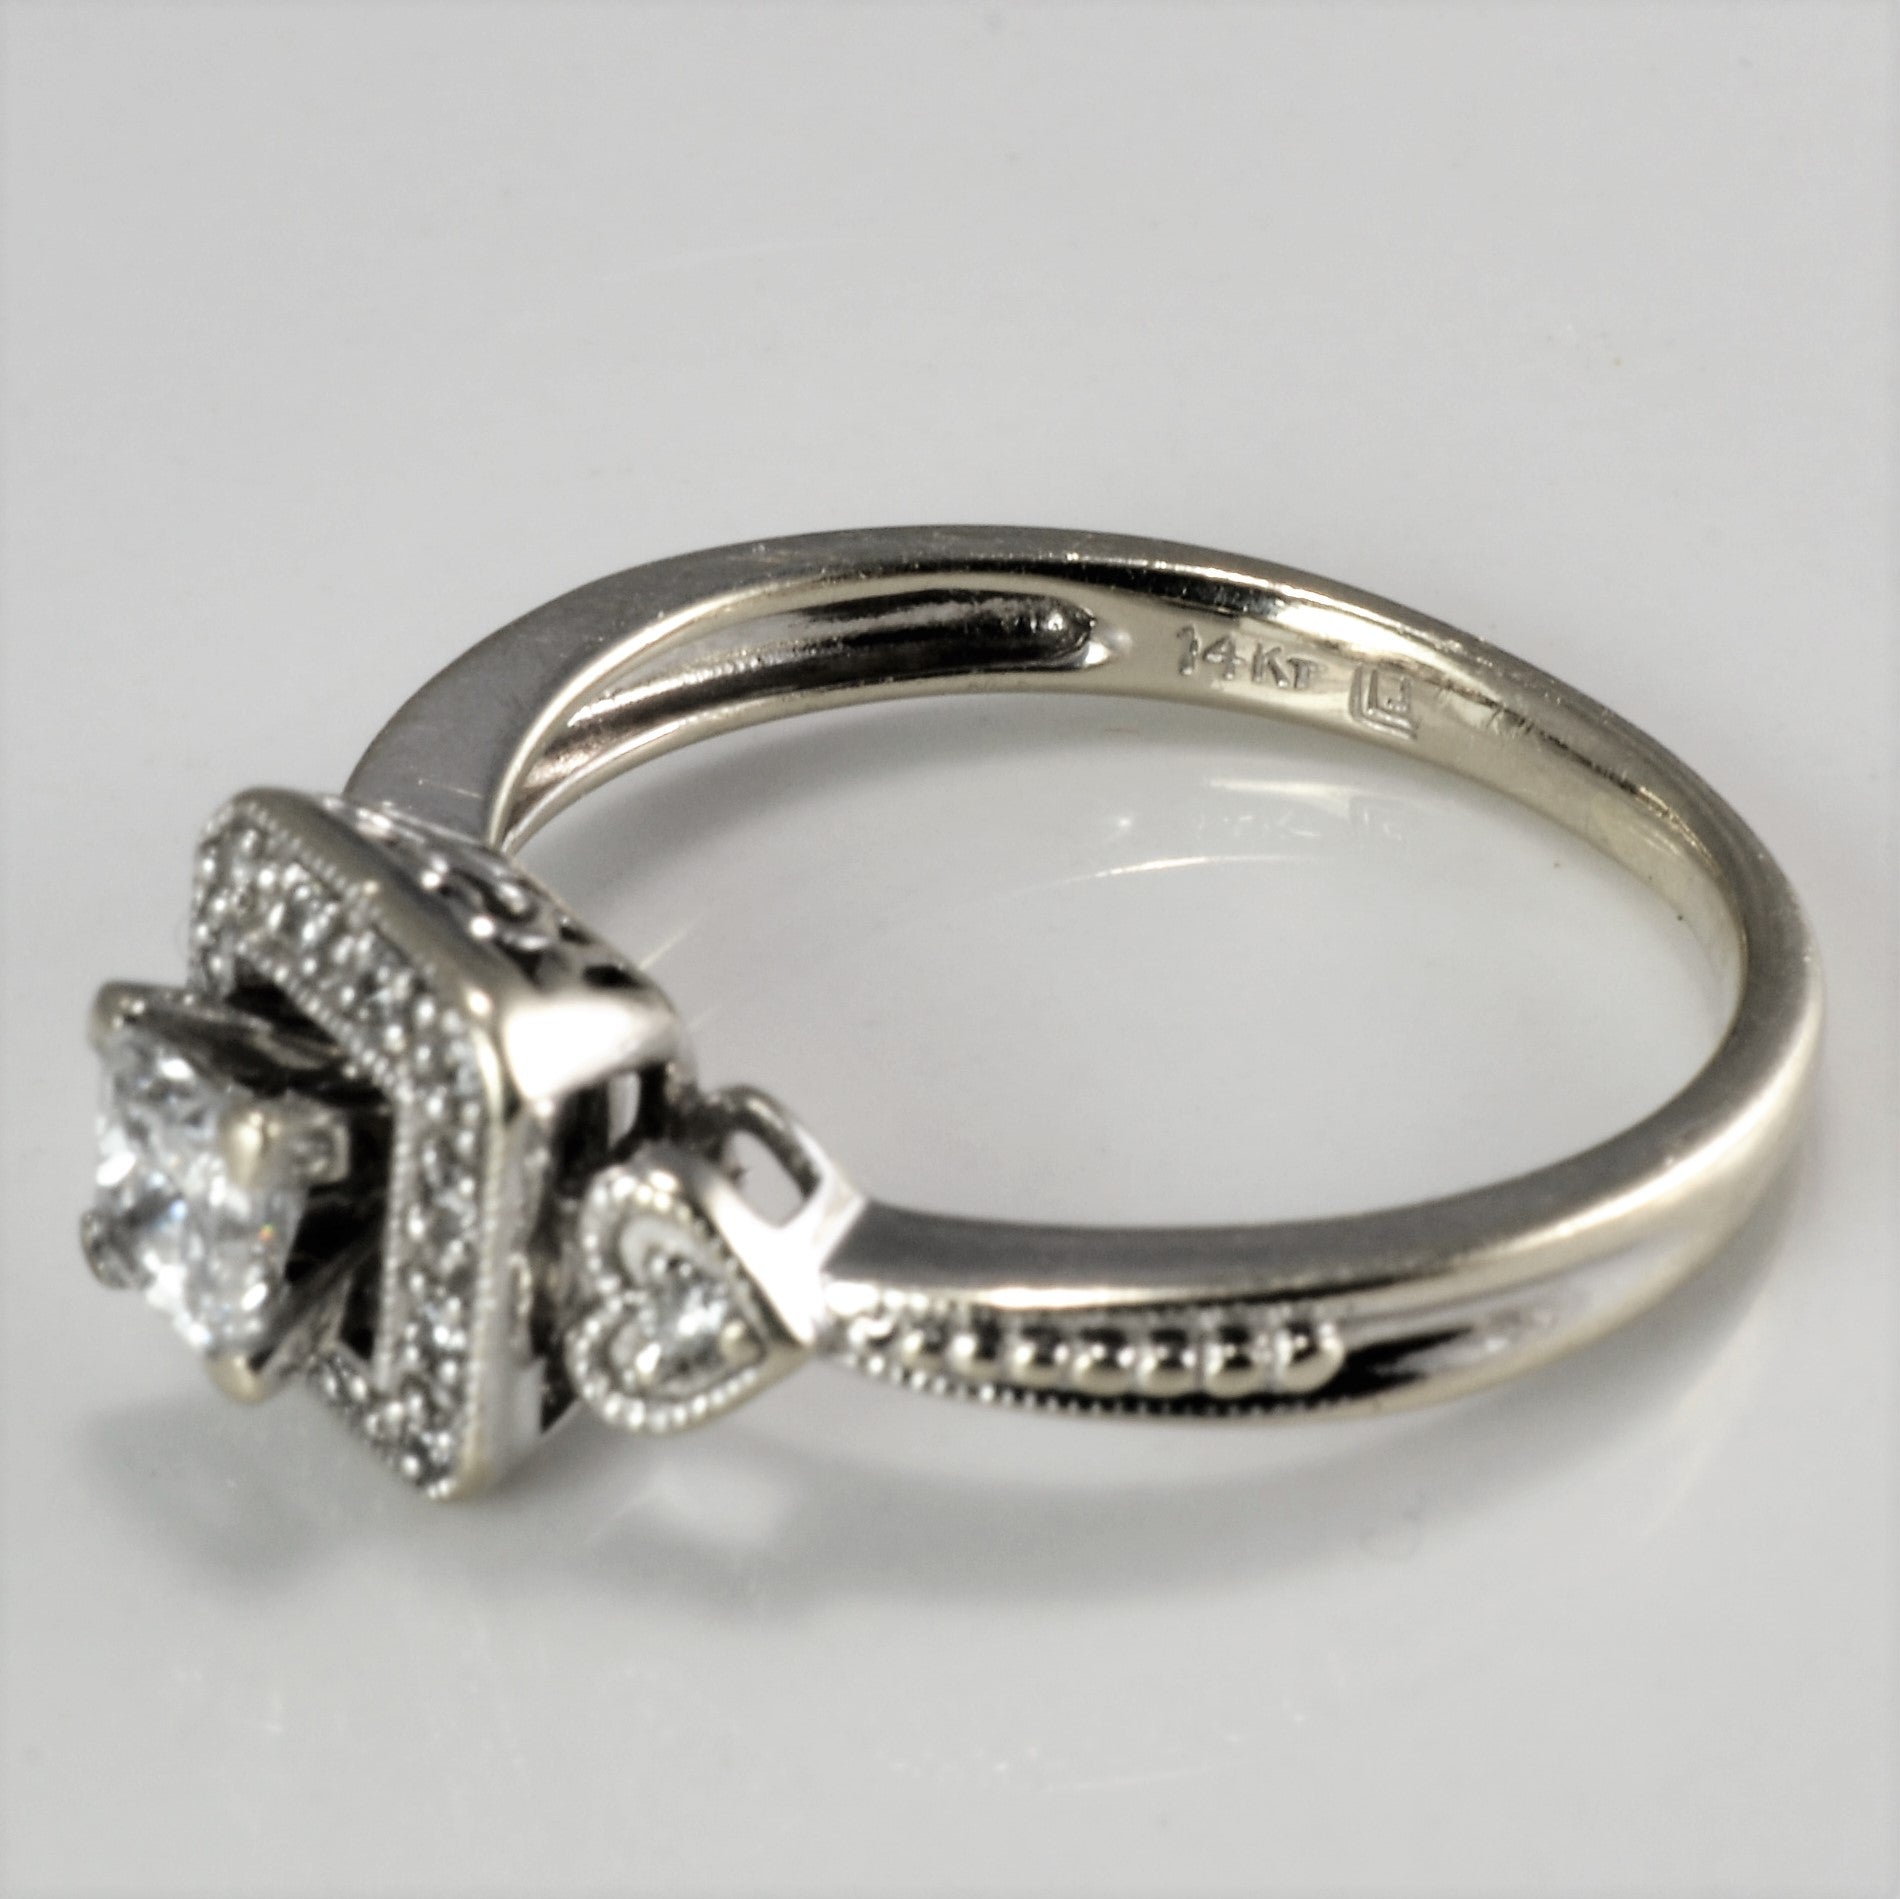 Milgrain Detailed Halo Diamond Engagement Ring | 0.35 ctw, SZ 6 |